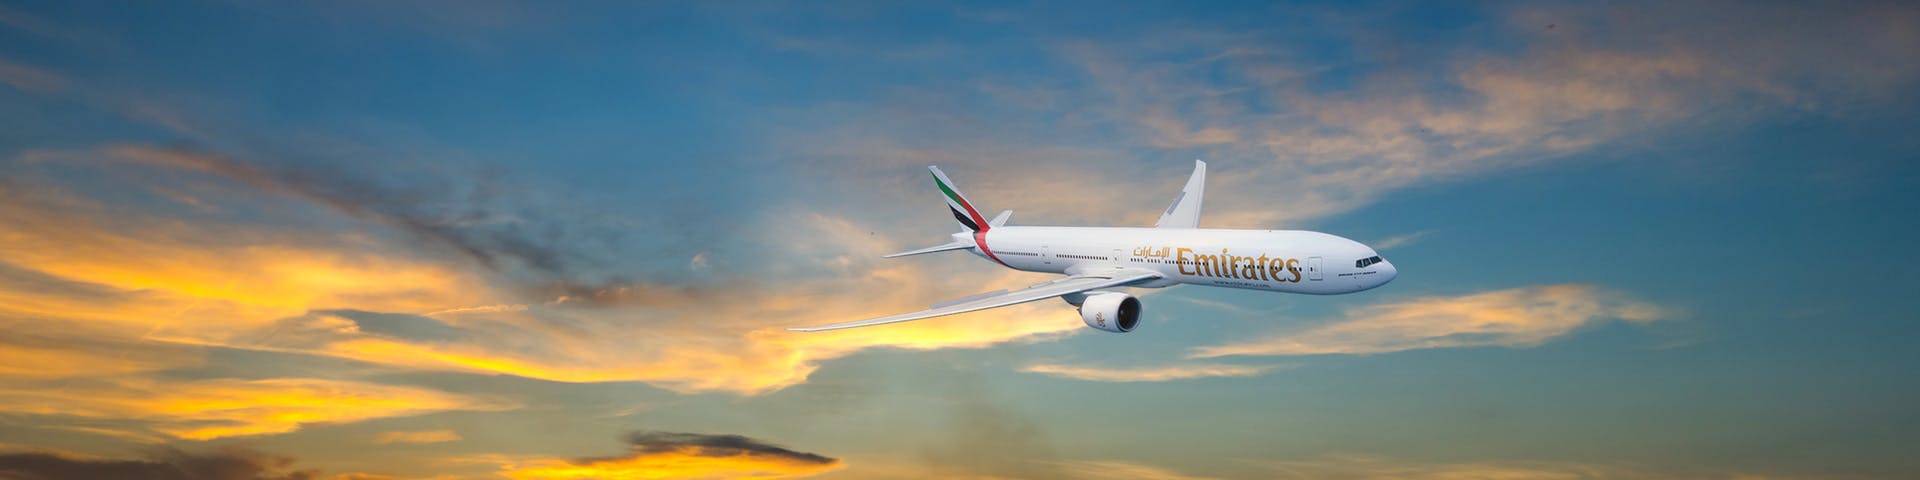 Emirates: Οι περικοπές στο προσωπικό από το 10% μπορεί να φθάσει στο 15% ήτοι τις 9.000 θέσεις εργασίας